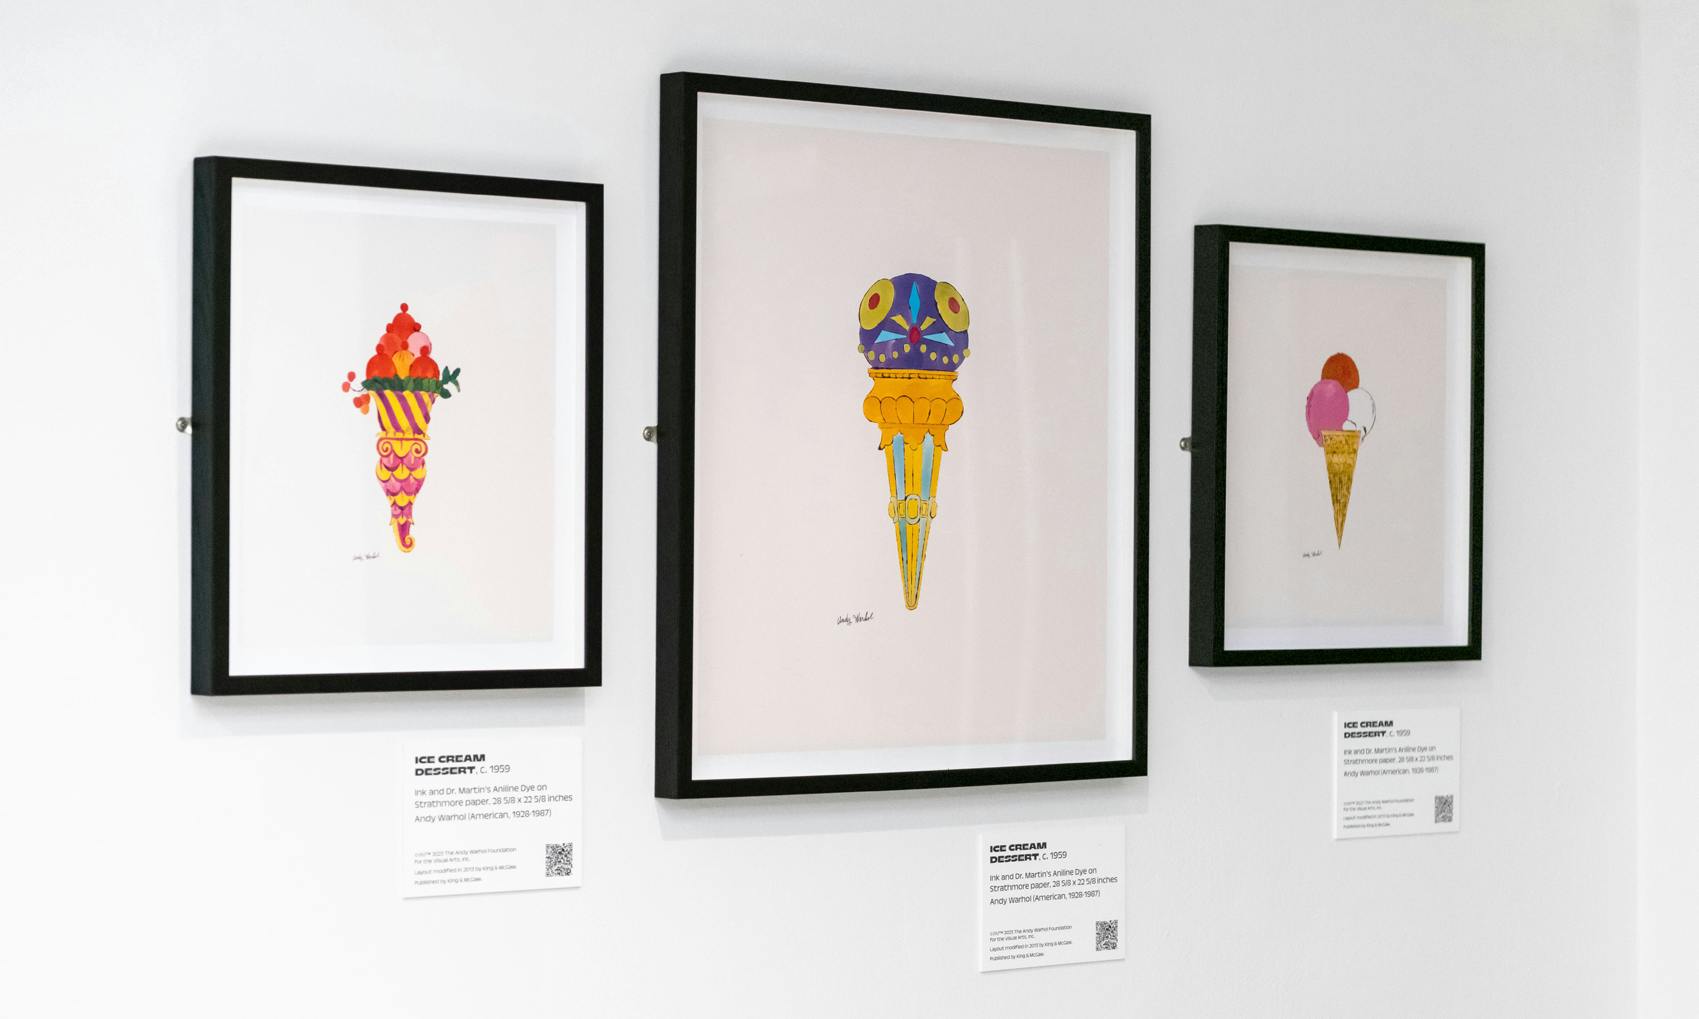 Warhol's illustrations